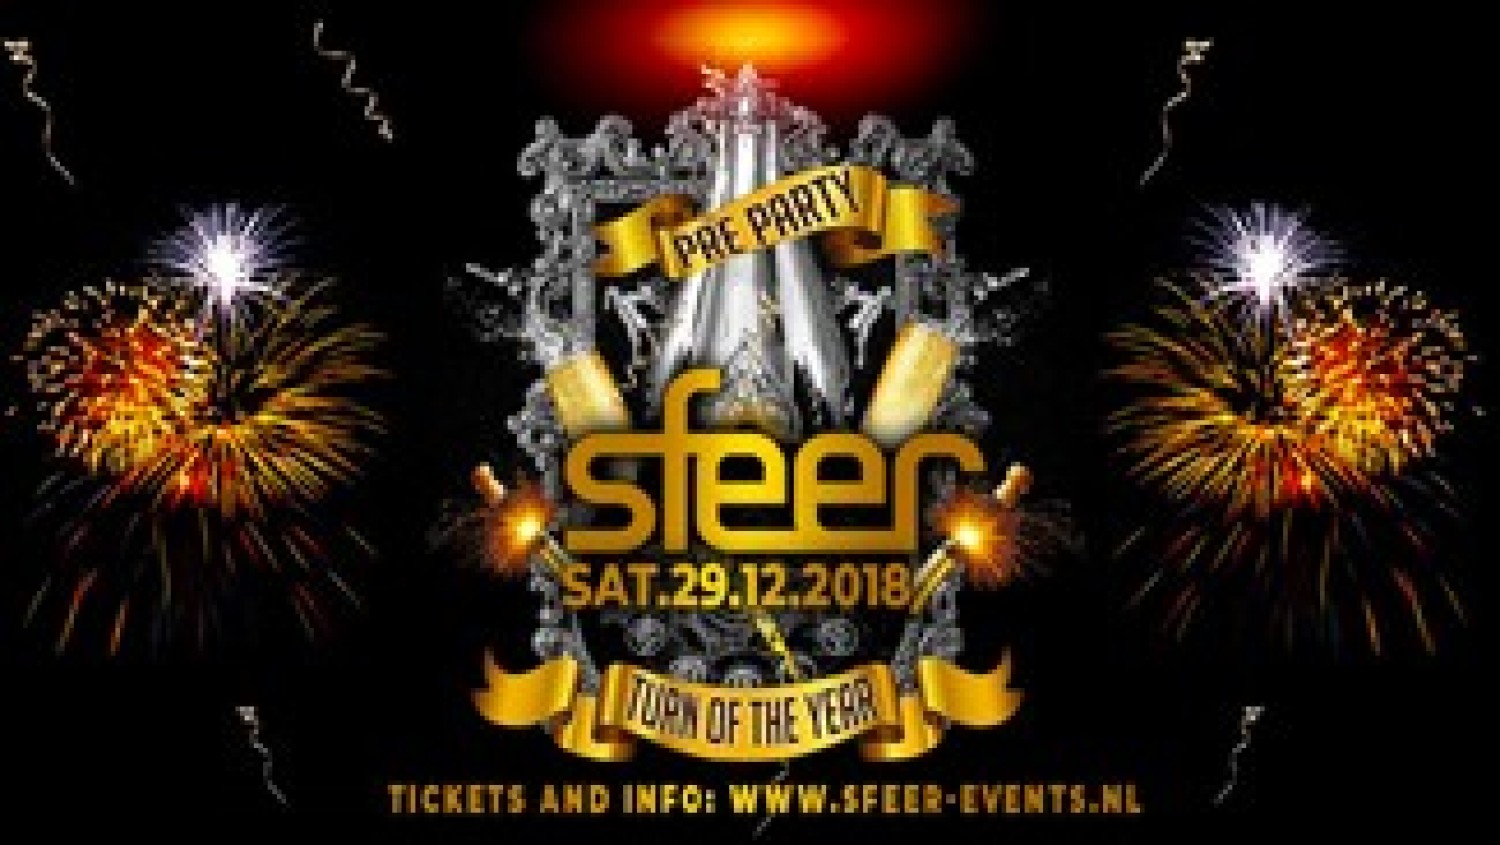 Party nieuws: Laatste tickets SFEER Turn of the Year 29 december!